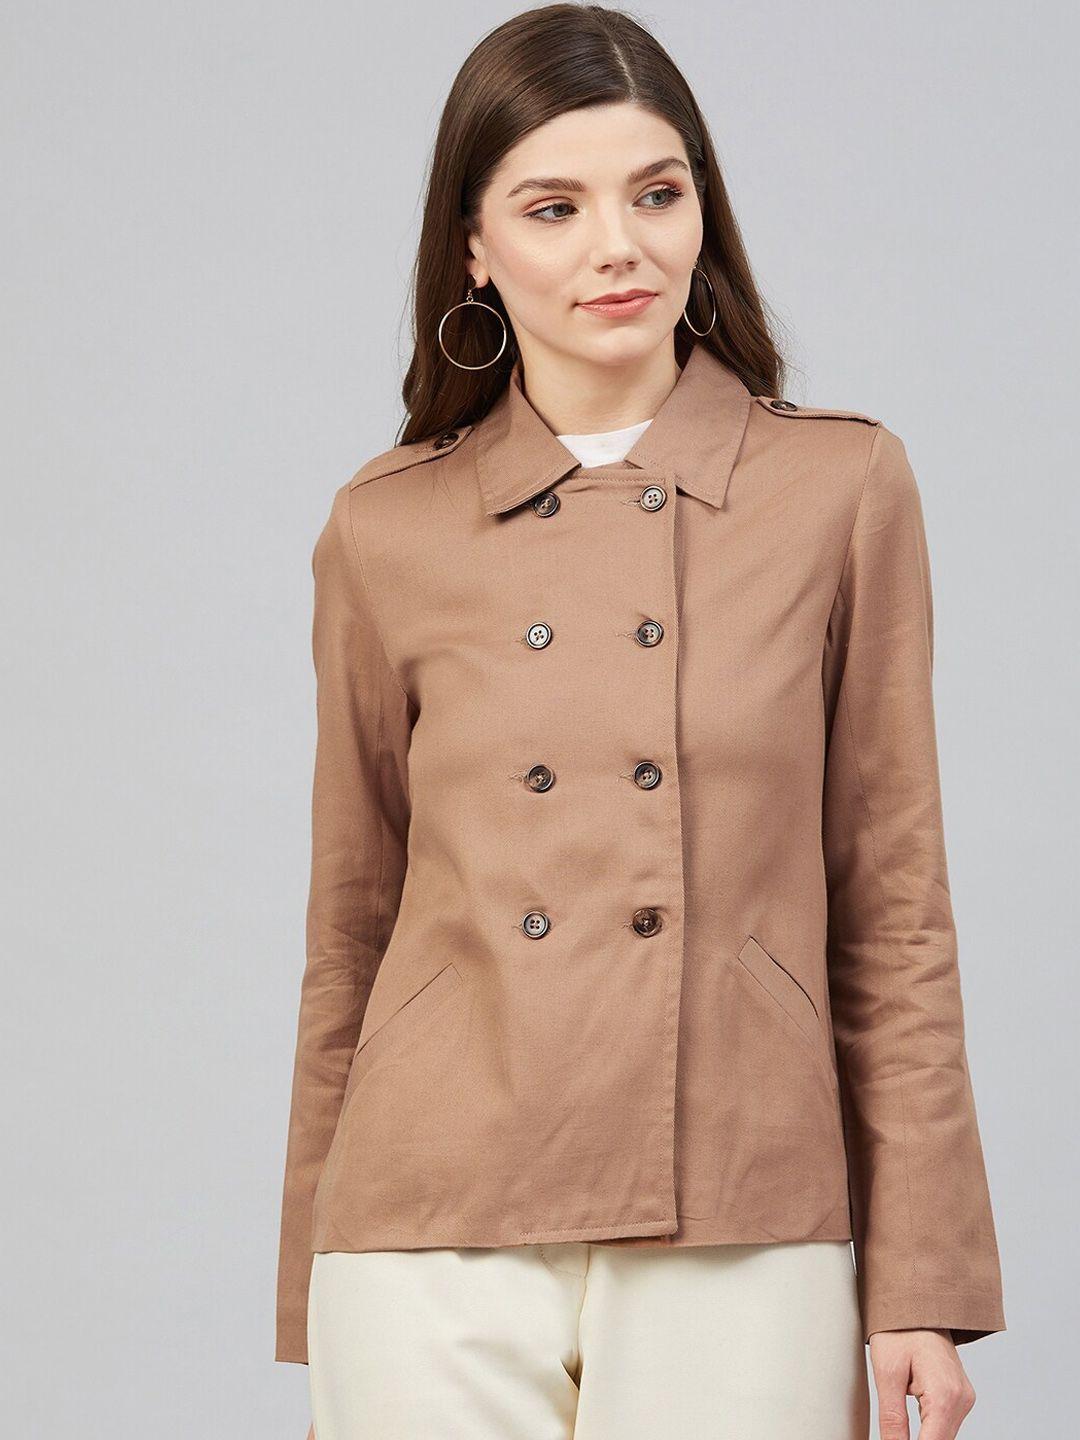 carlton london women khaki solid tailored jacket